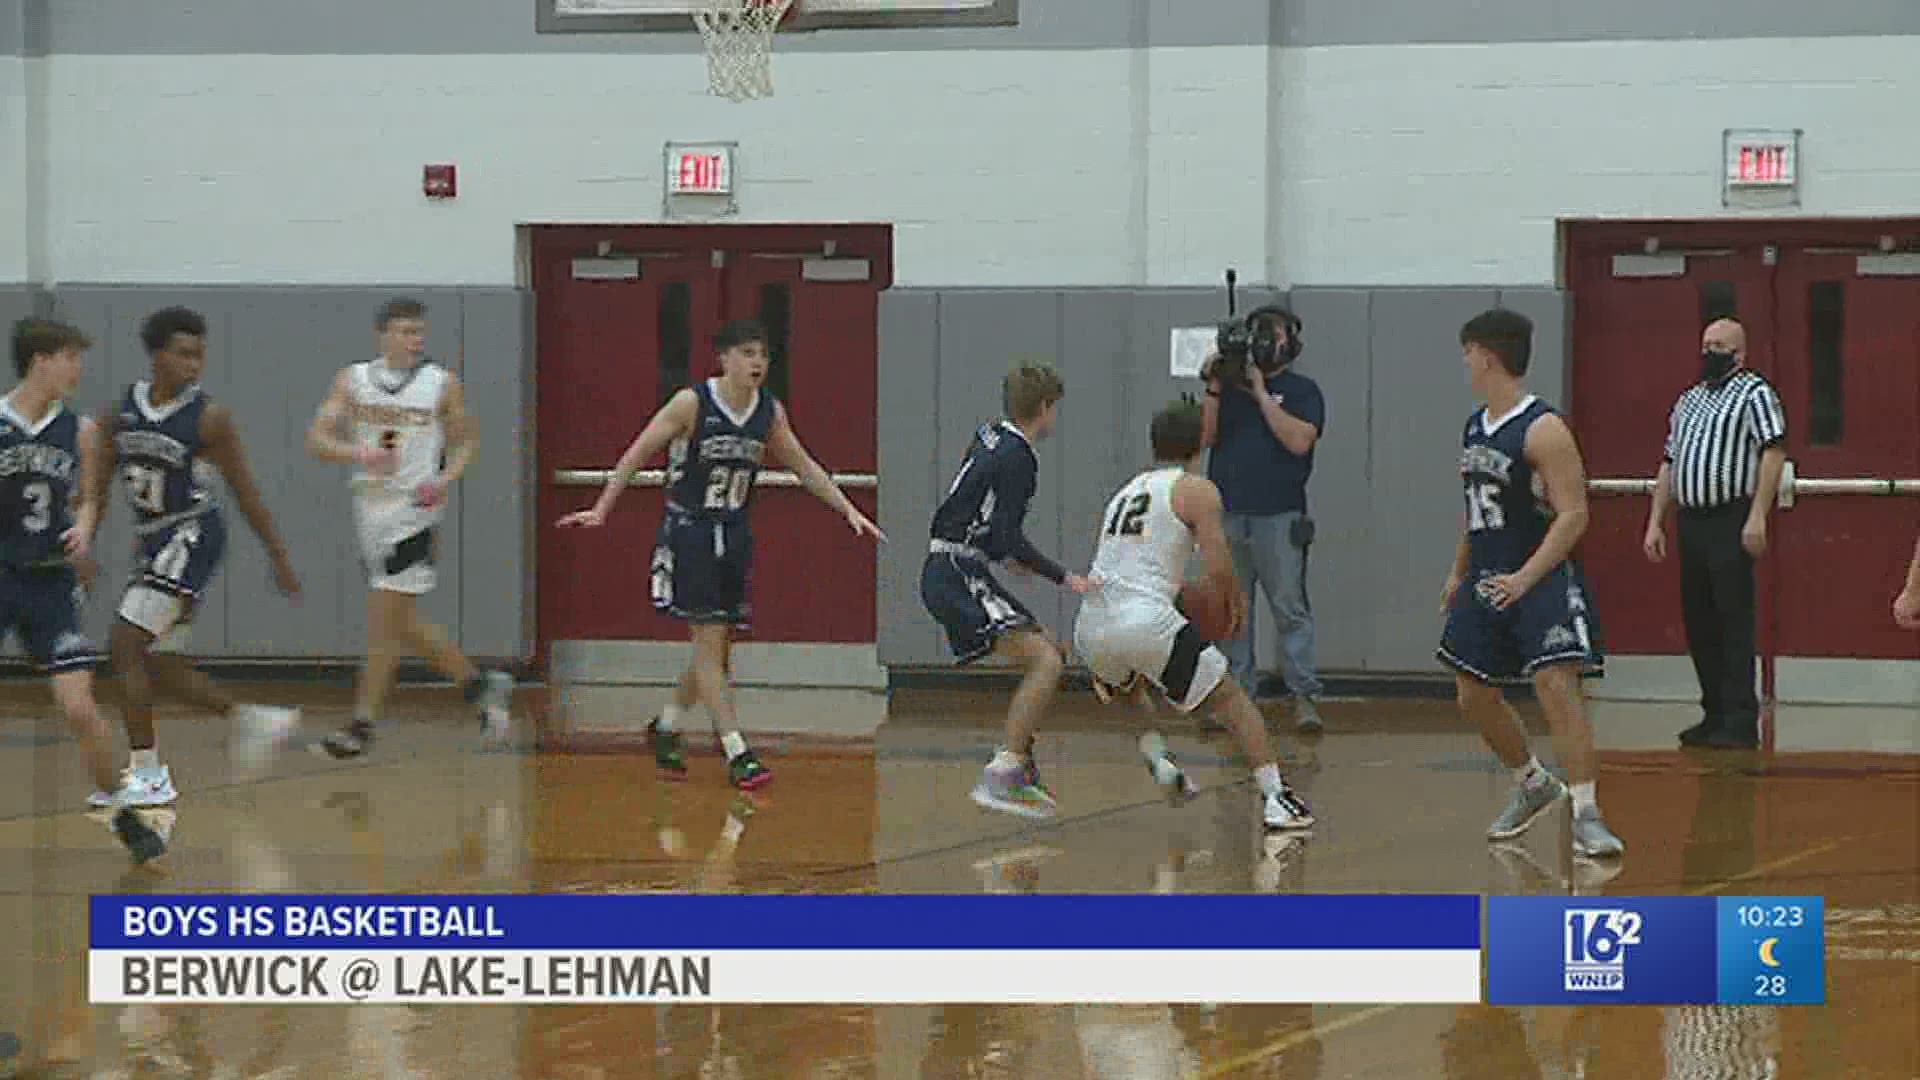 Lake-Lehman defeats Berwick in boys HS basketball